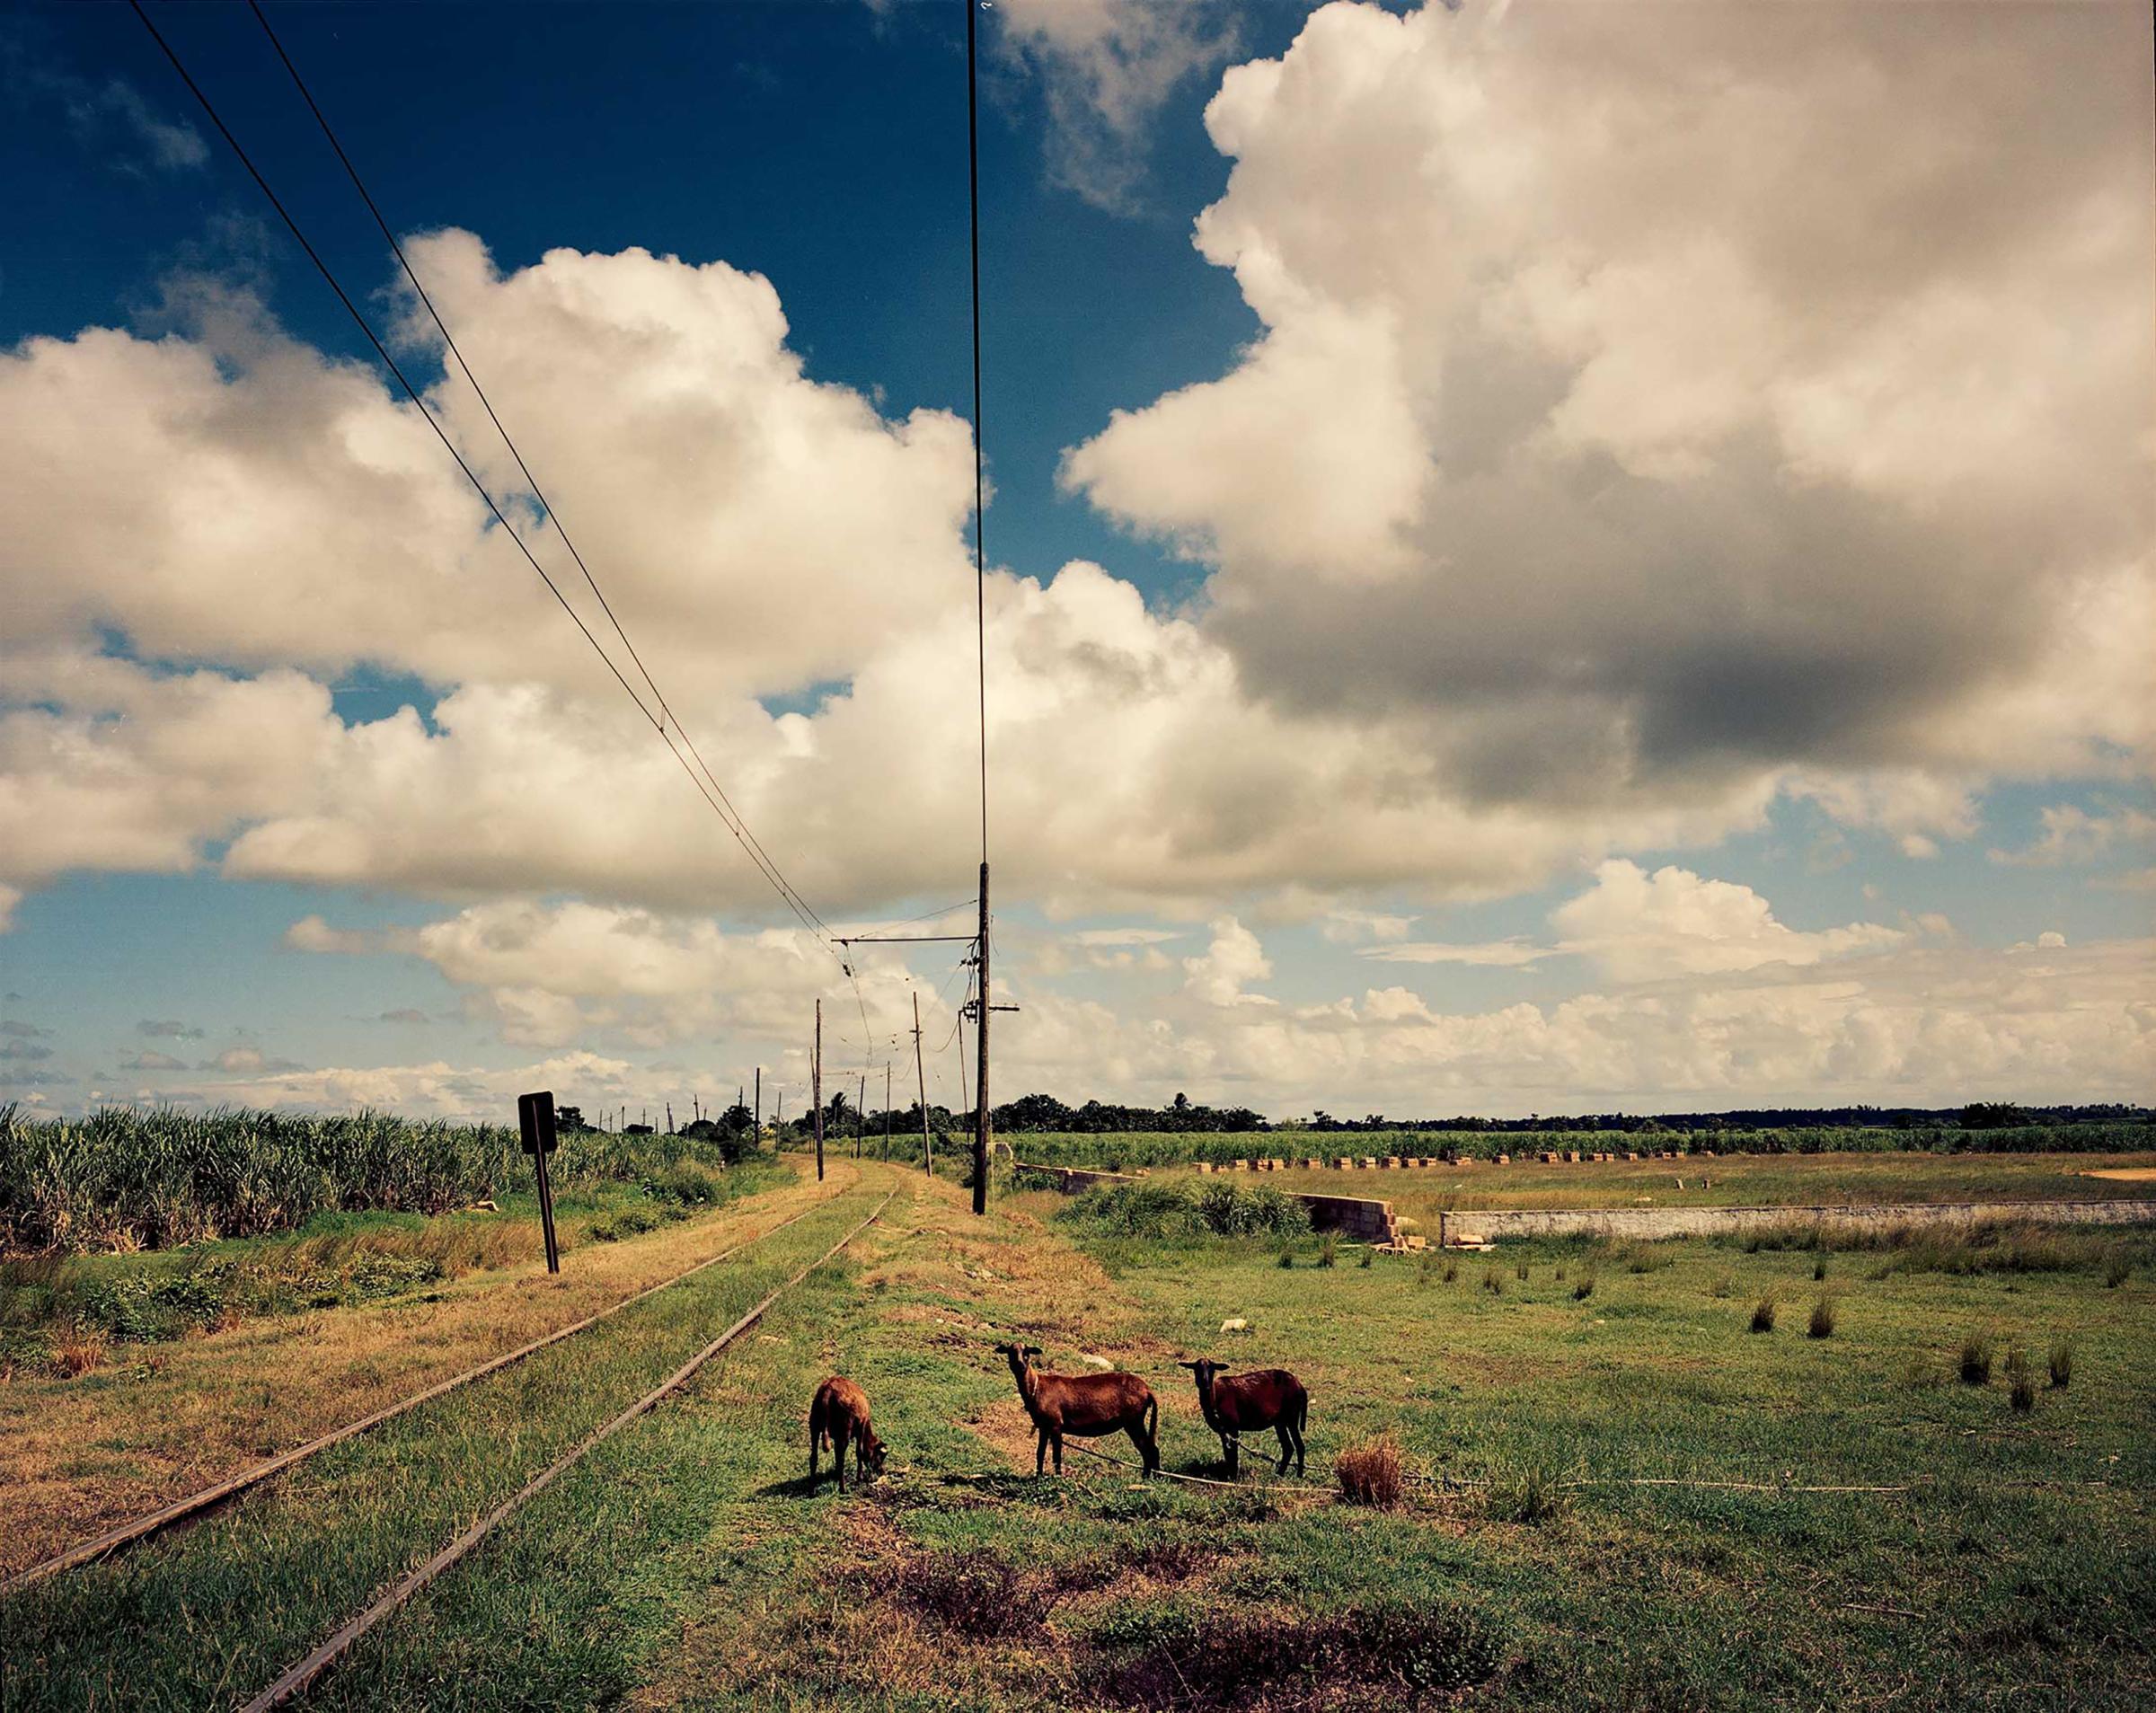 Lambs grazing near the Hershey electric train railway in Cuba.